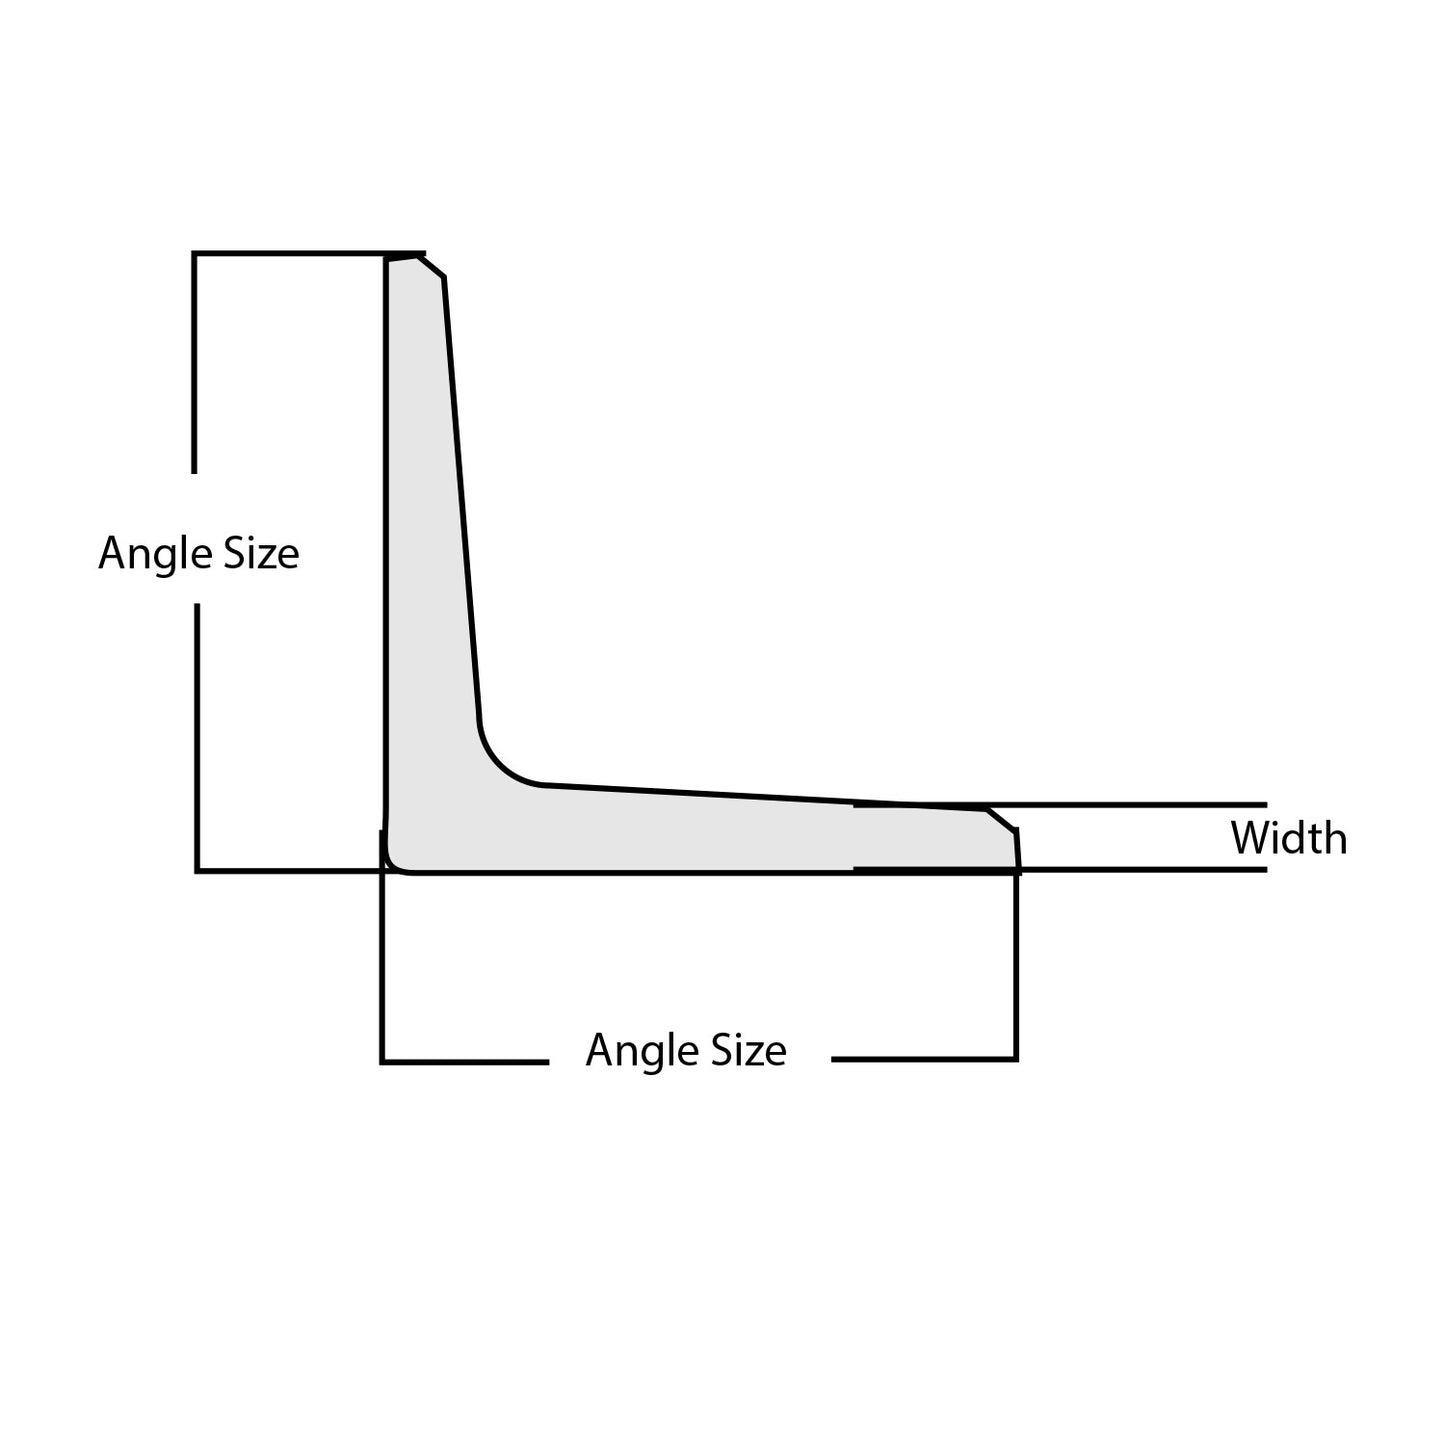 1" x 1" Aluminum Angle - Thickness 3/16